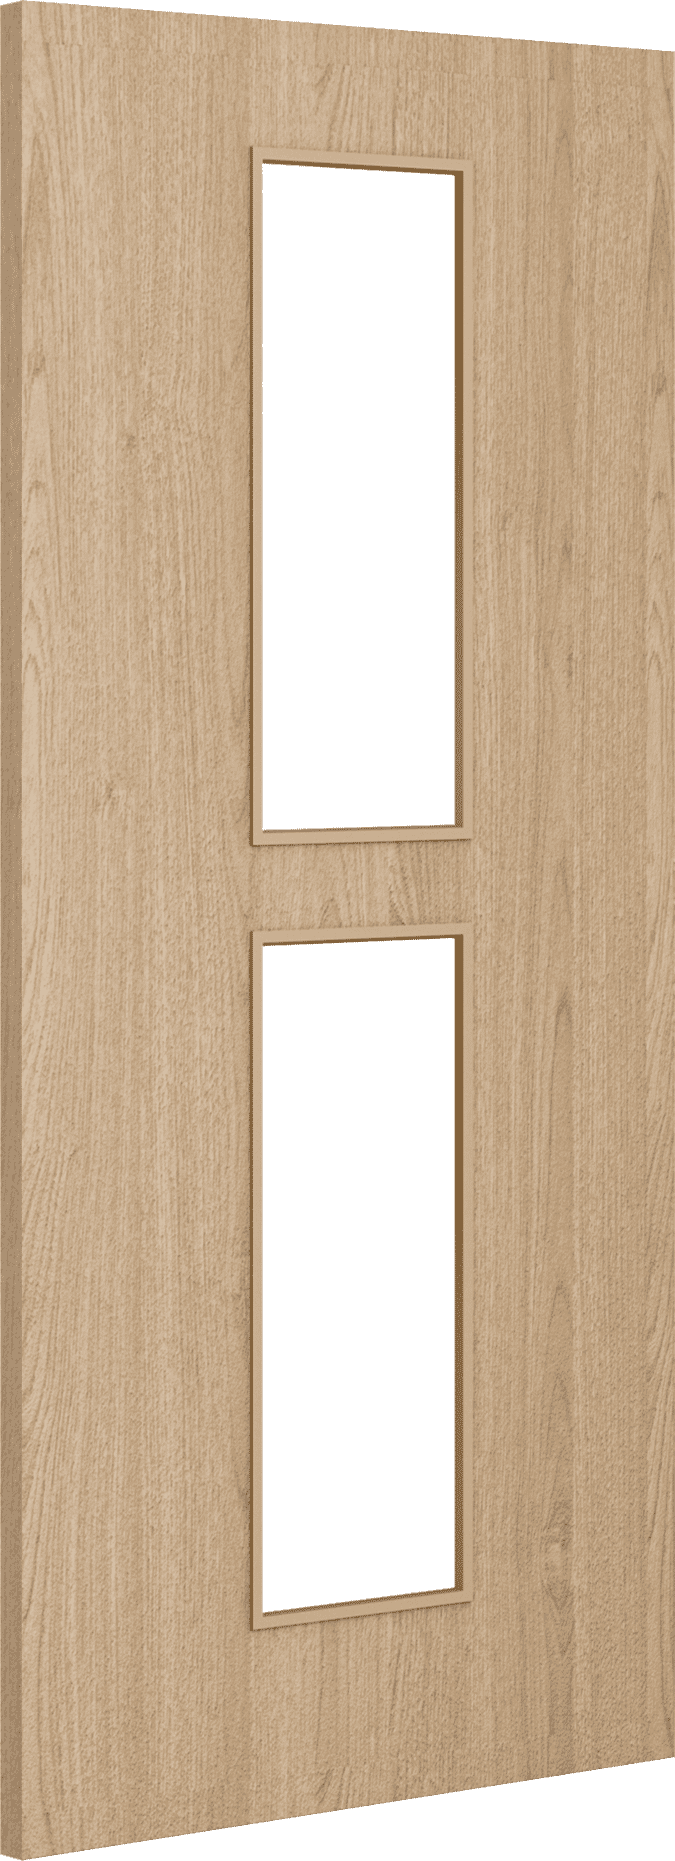 2032mm x 813mm x 44mm (32") Architectural Oak 12 Frosted Glazed - Prefinished FD30 Fire Door Blank